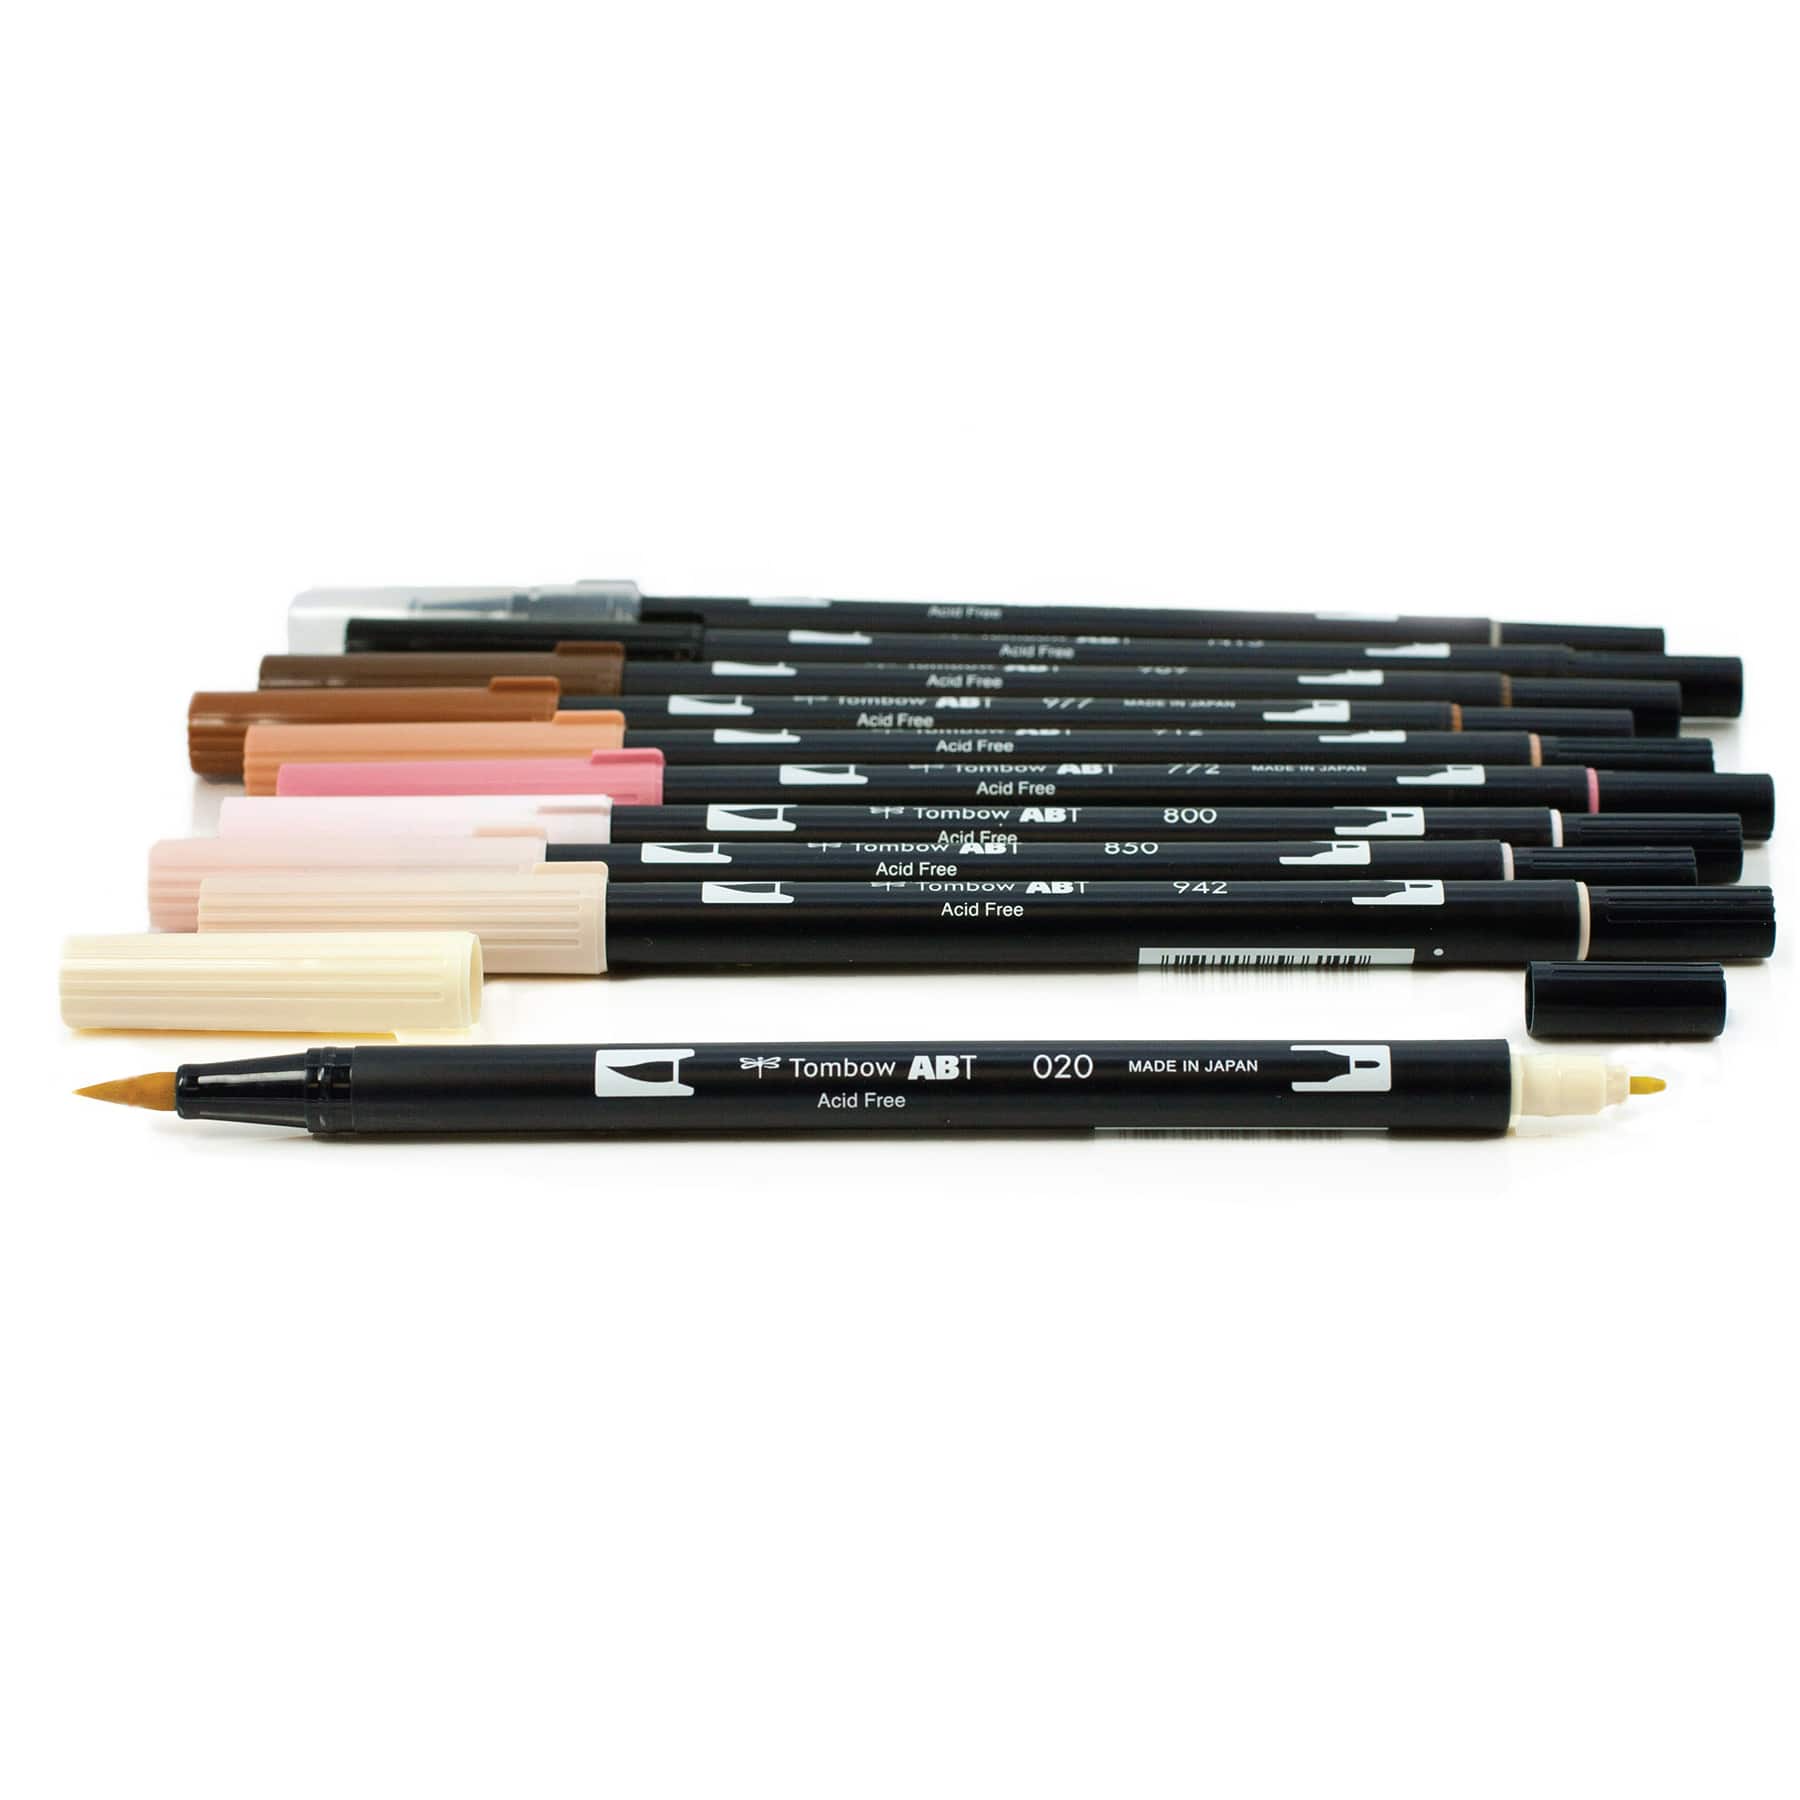 6 Packs: 10 ct. (60 total) Tombow Portrait Dual Brush Pen Set